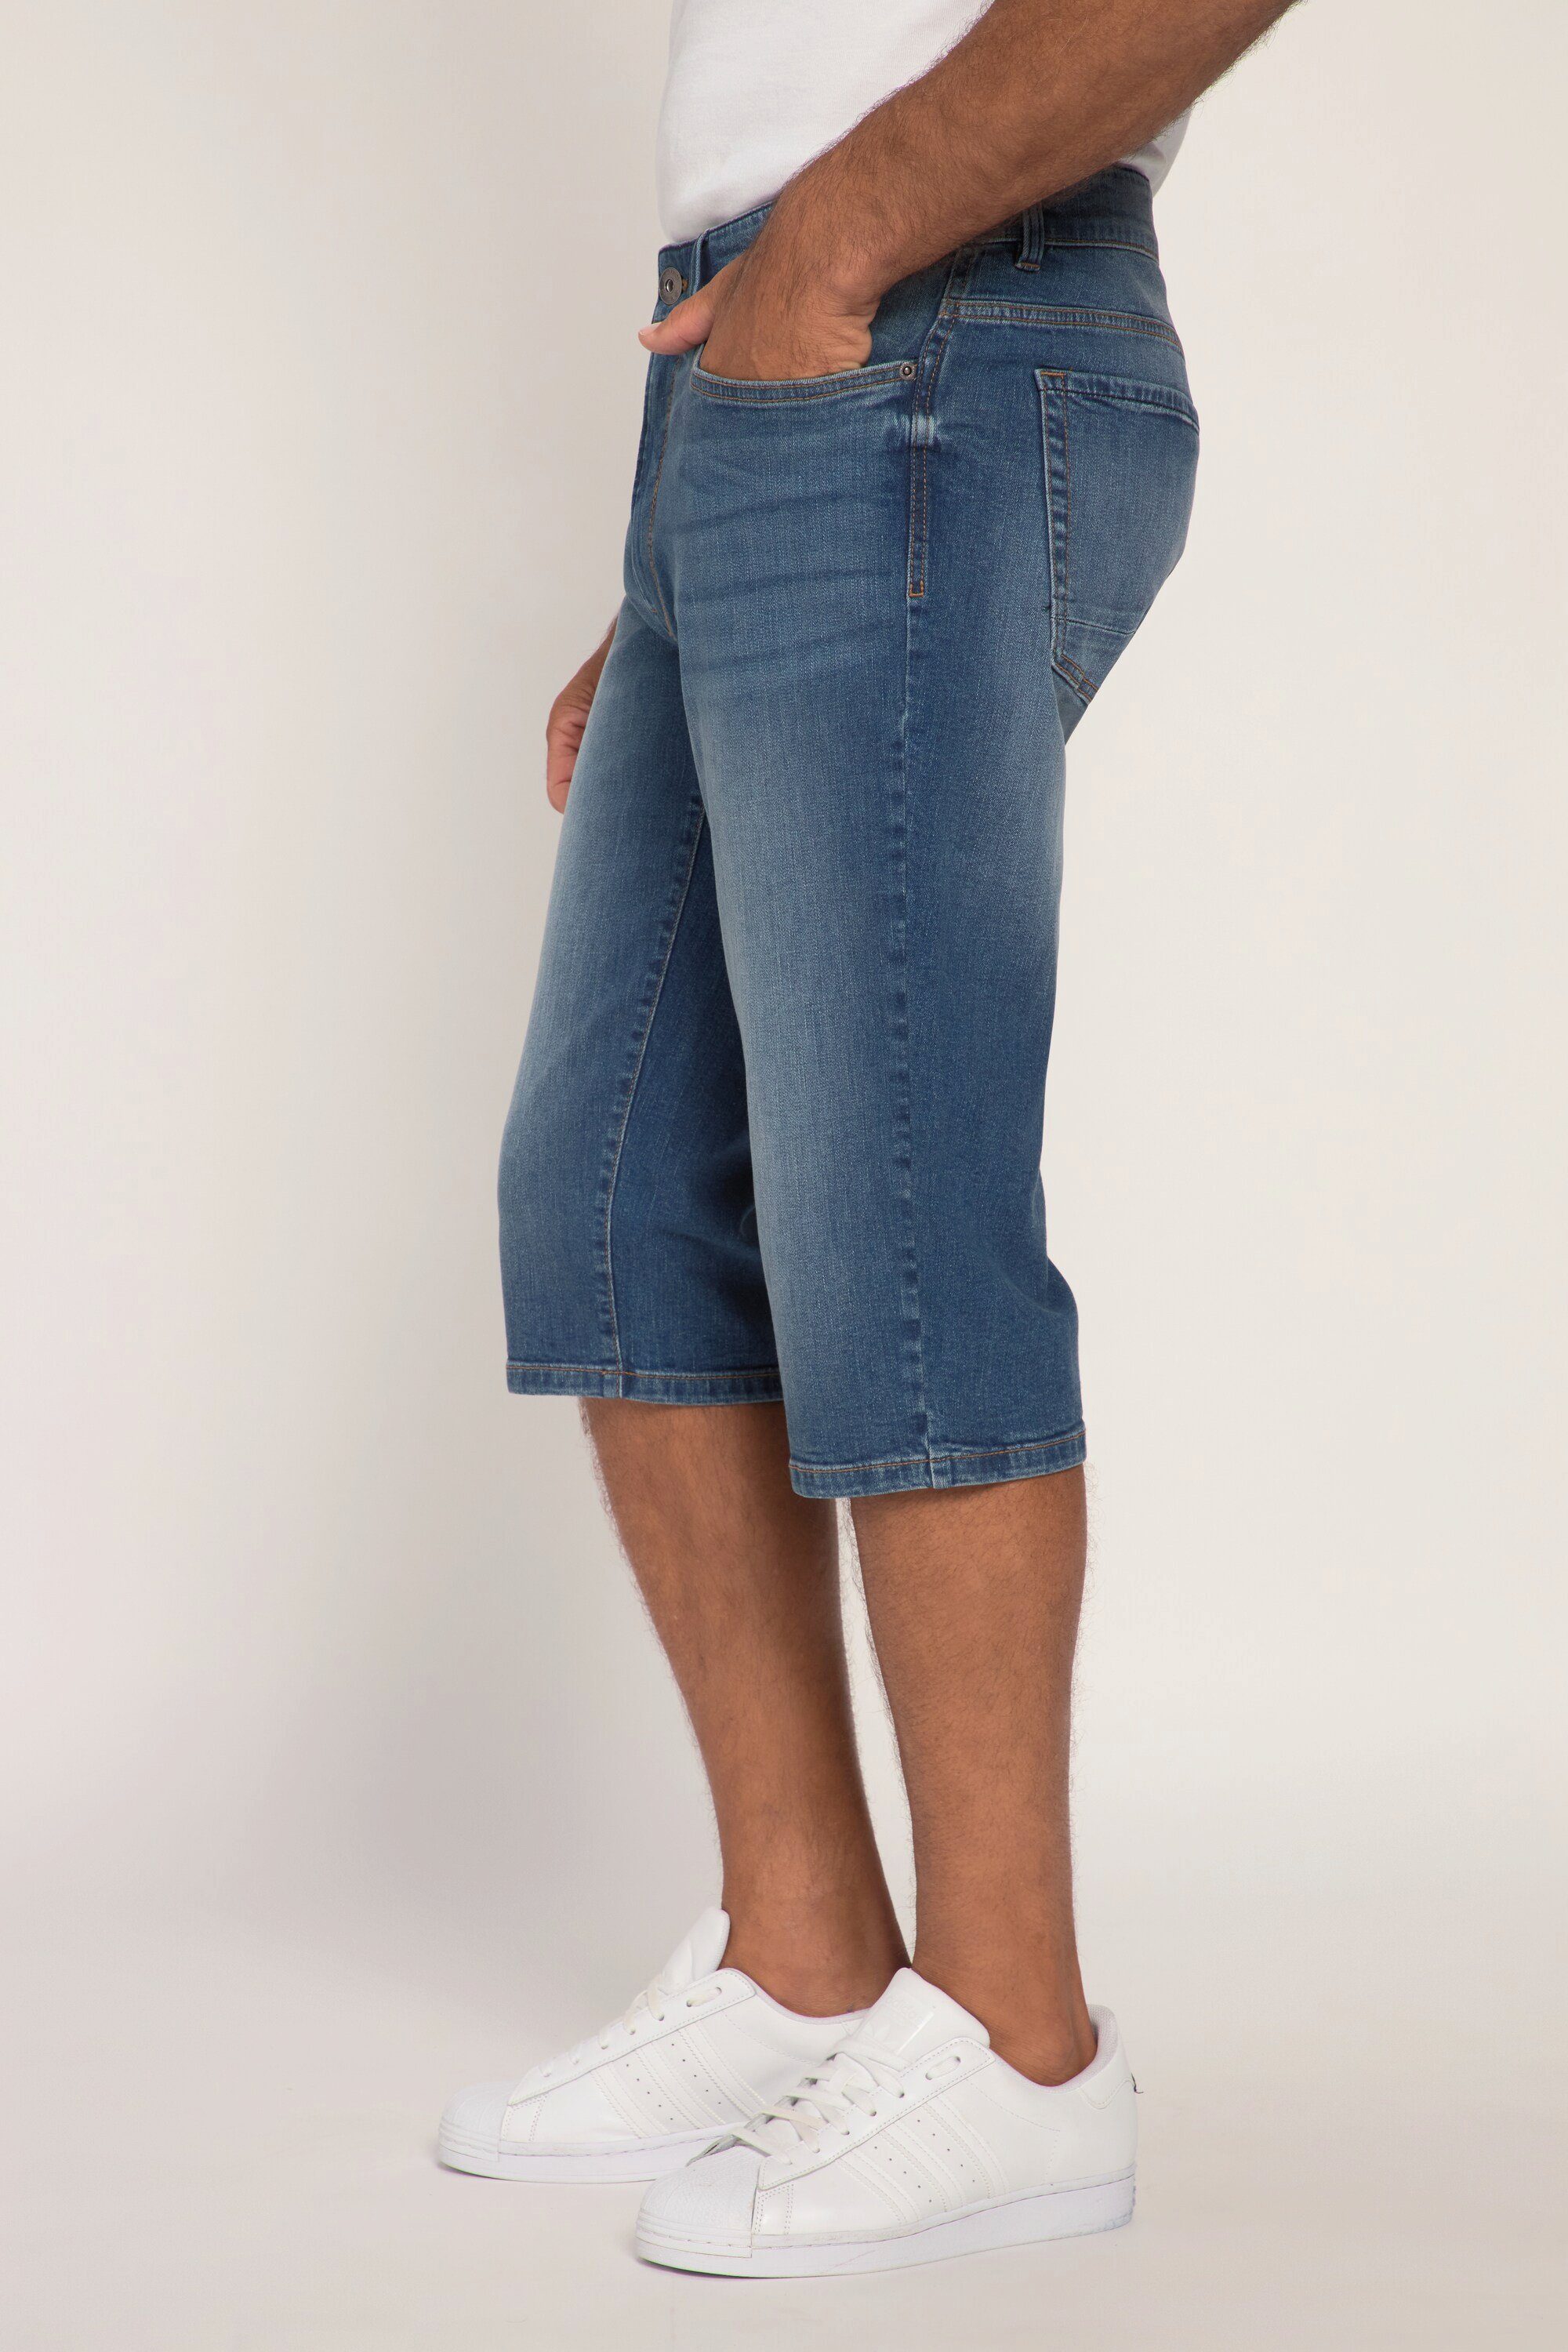 Powerstretch 3/4-Jeans medium JP1880 5-Pocket stone Jeansbermudas